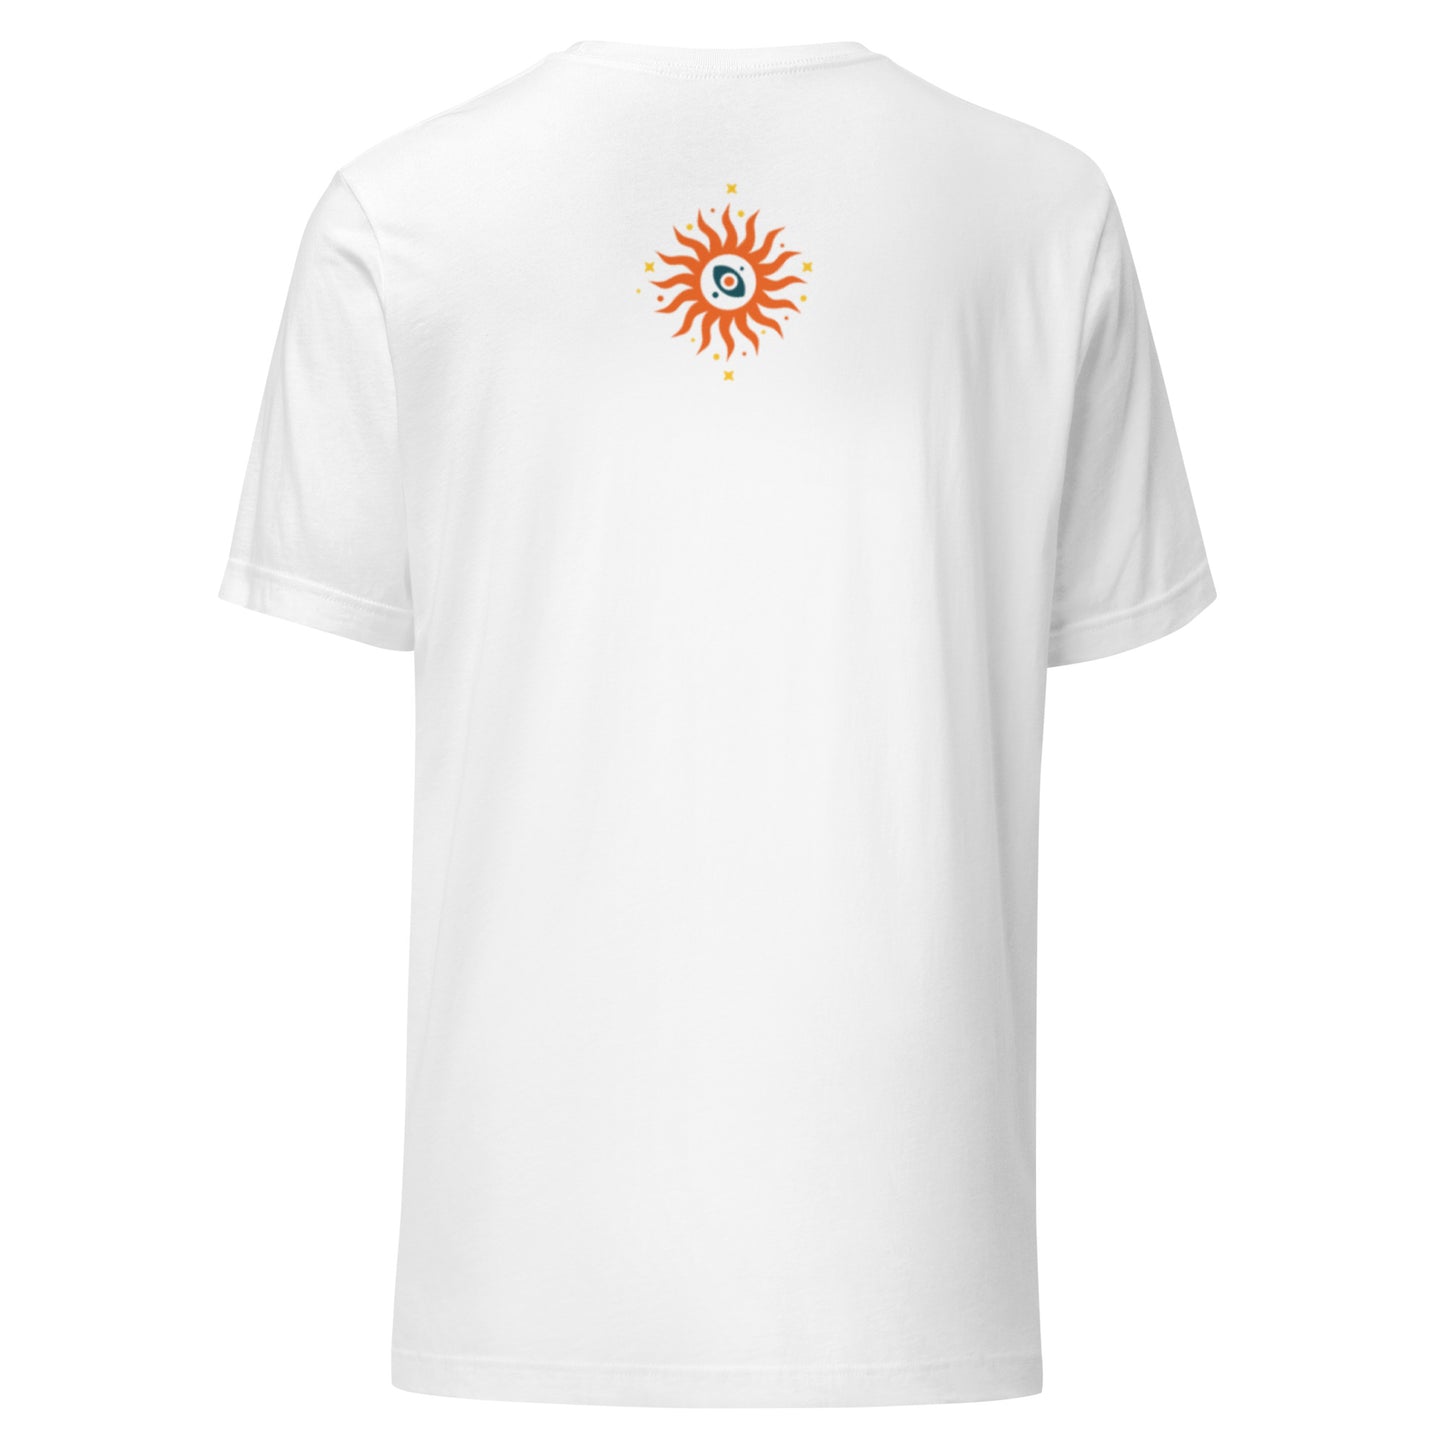 CABALAHATE TOO - Unisex t-shirt